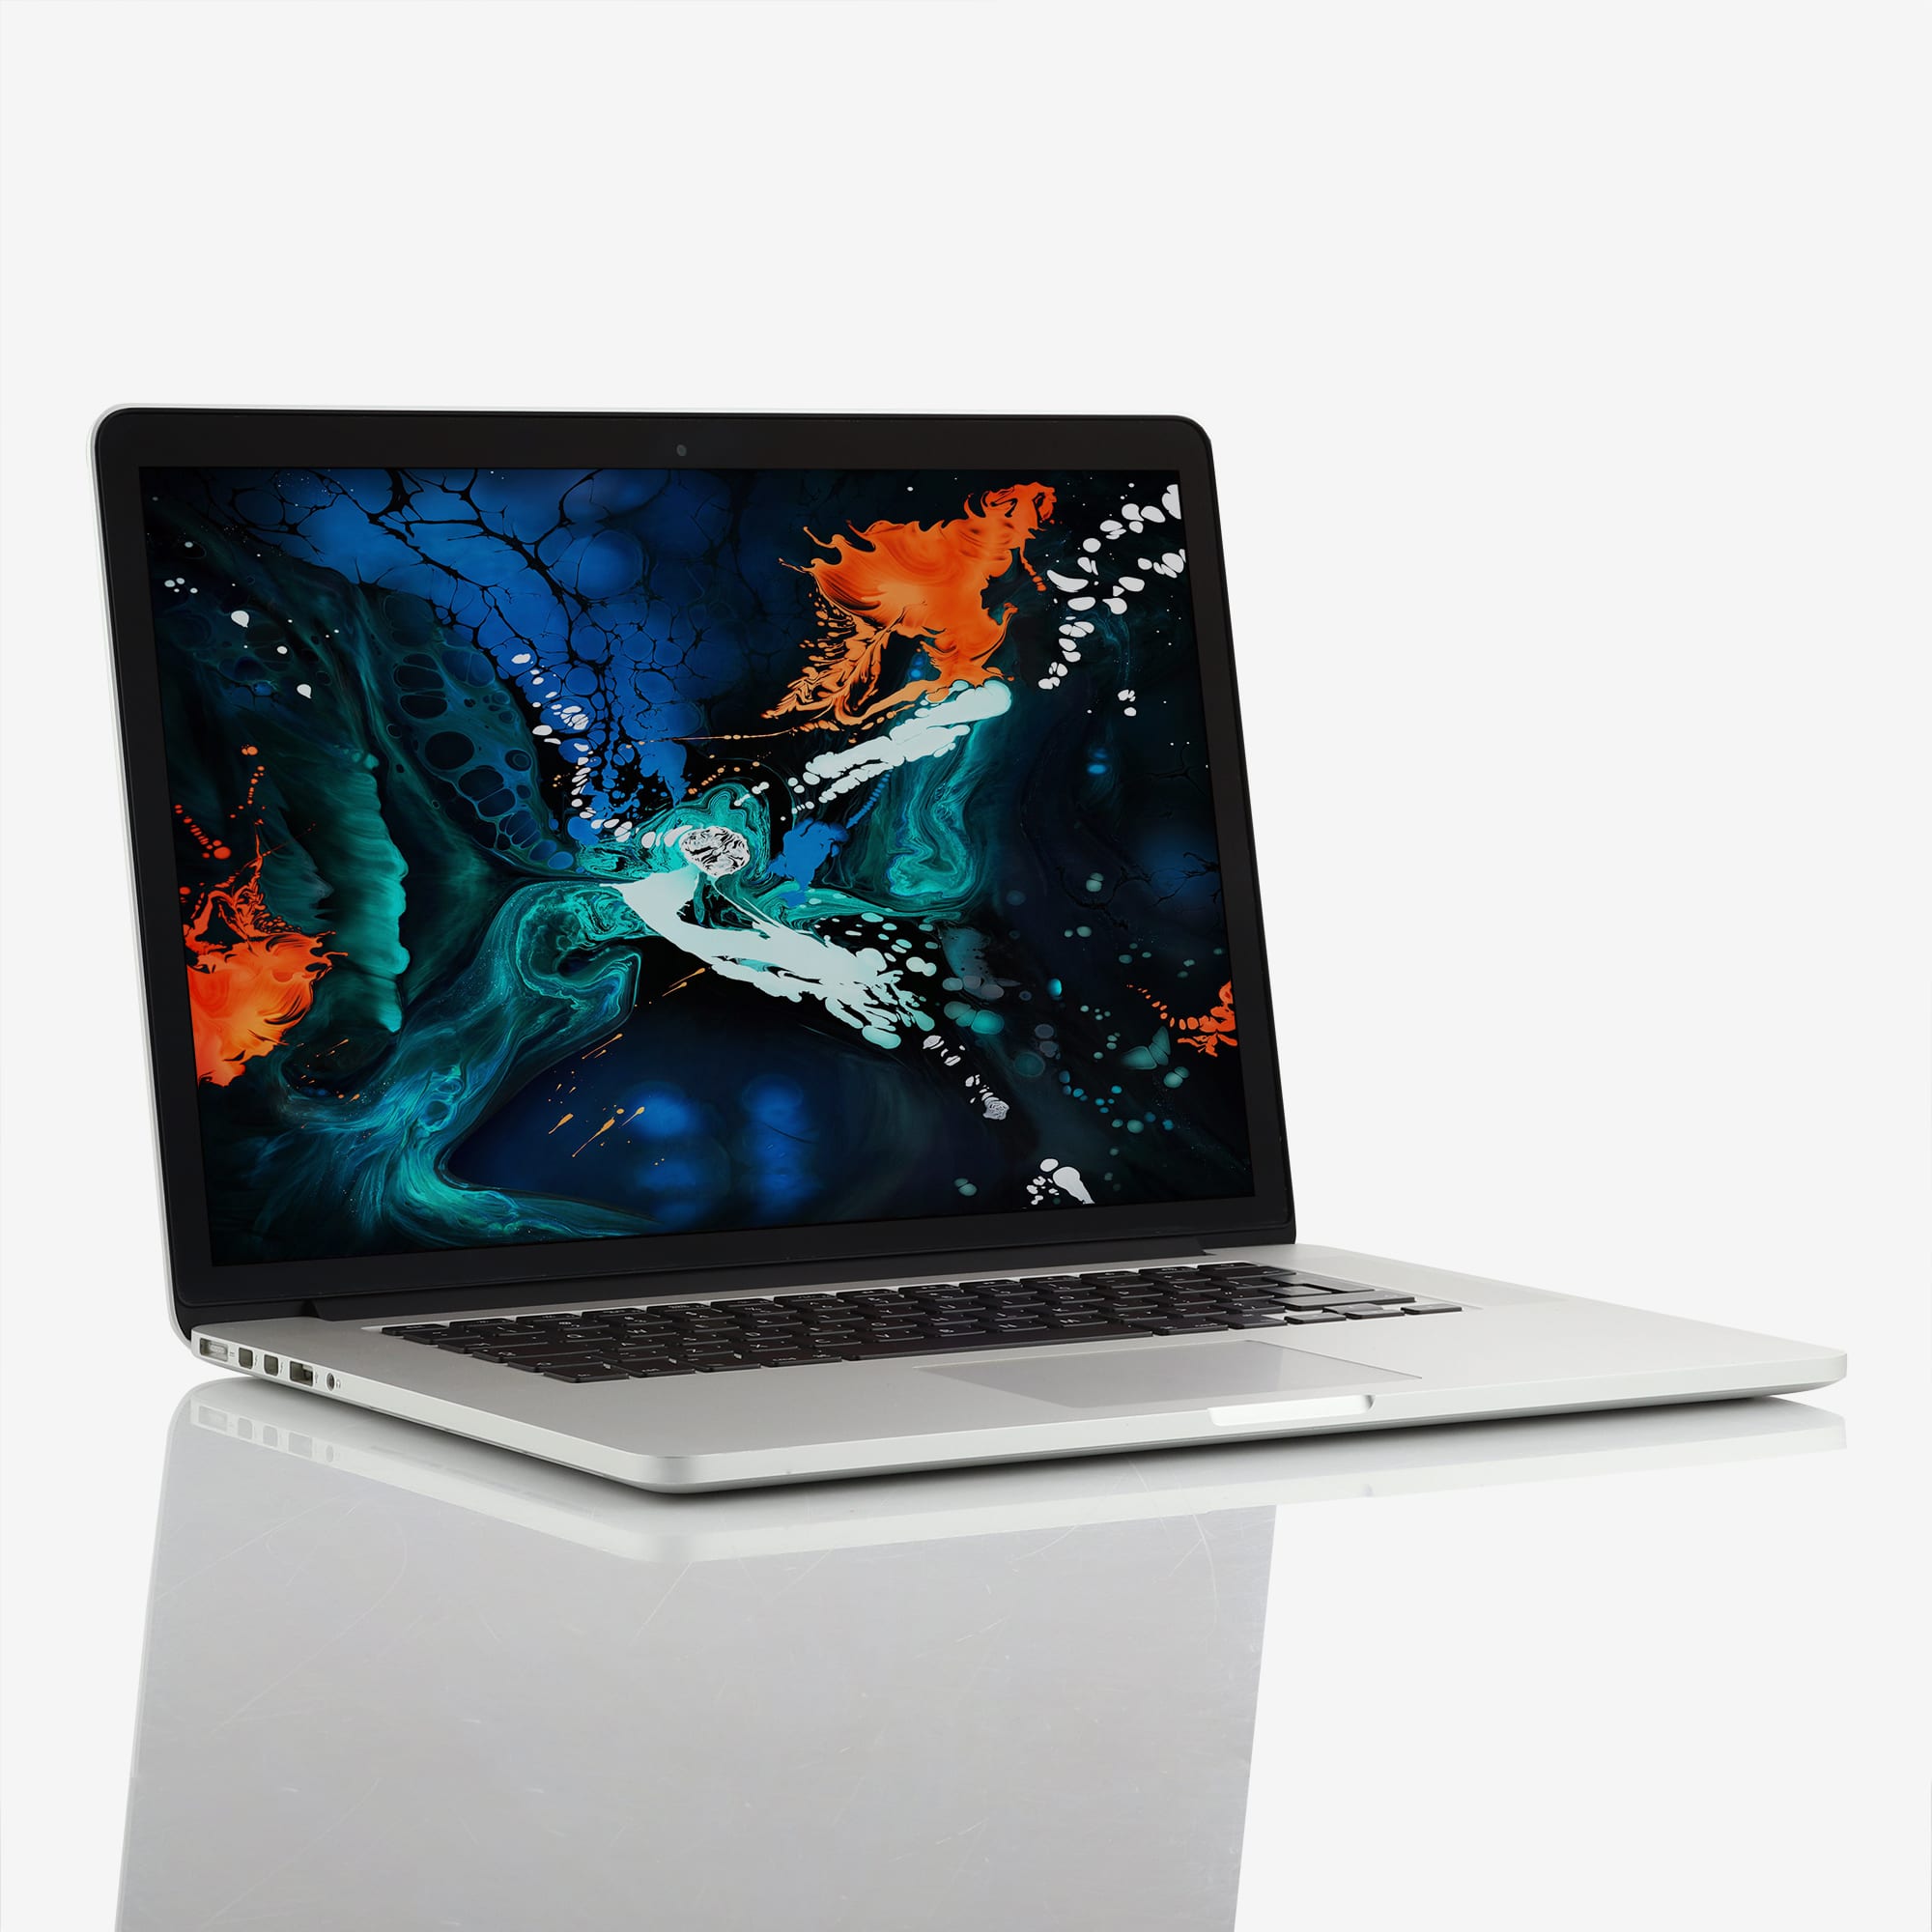 1 x Apple MacBook Pro Retina 15 Inch Intel Core i7 2.50 GHz (2014)